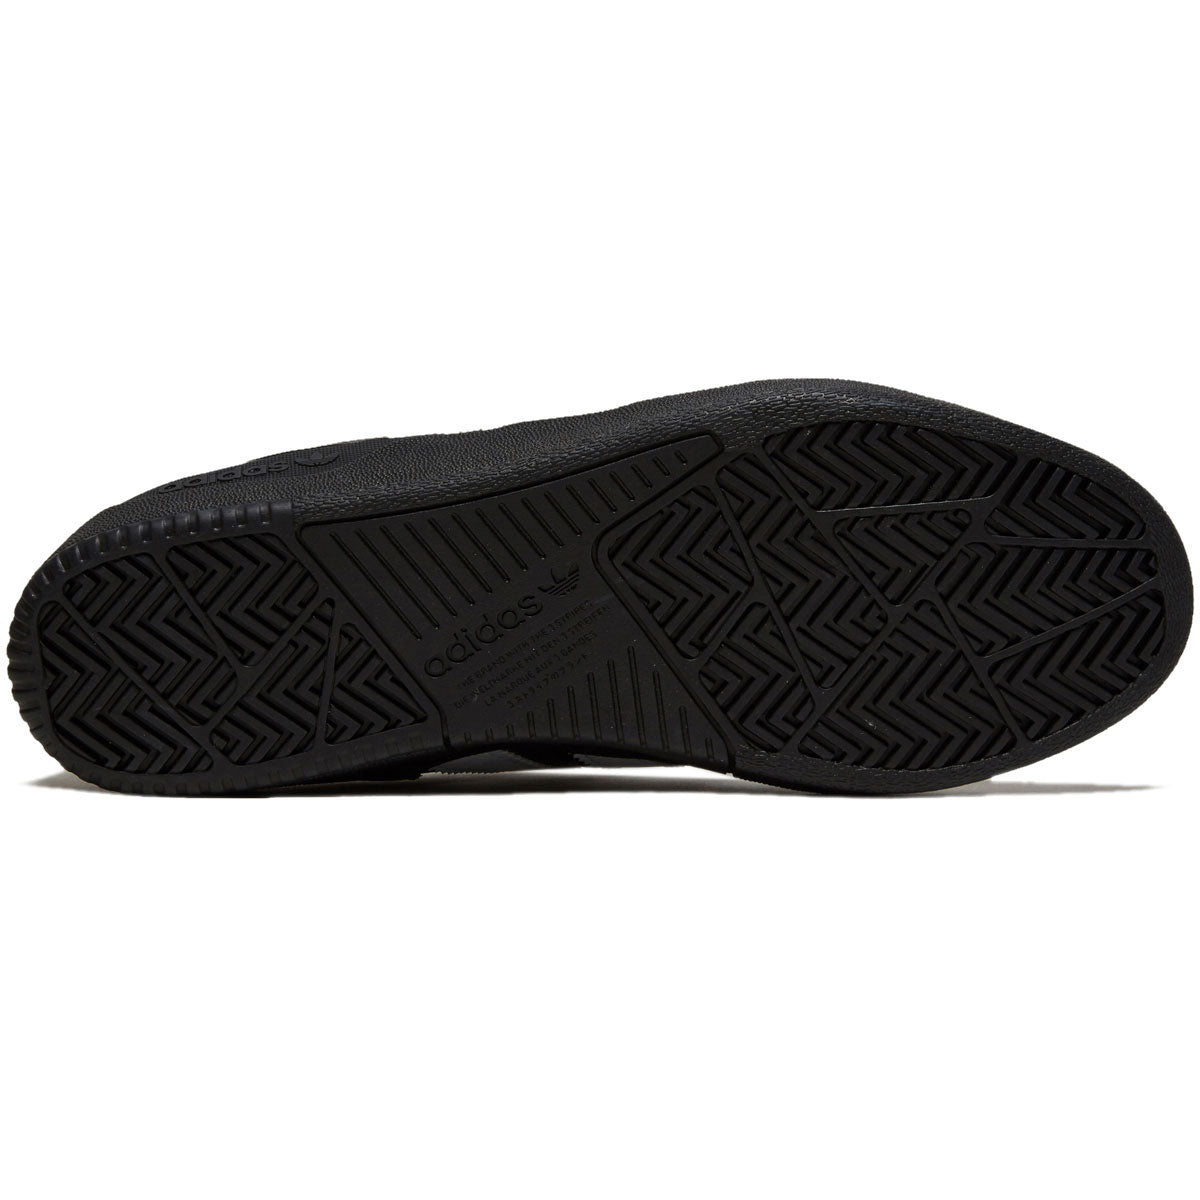 Adidas Tyshawn Low Shoes - New Black/White/Gold Metallic image 4